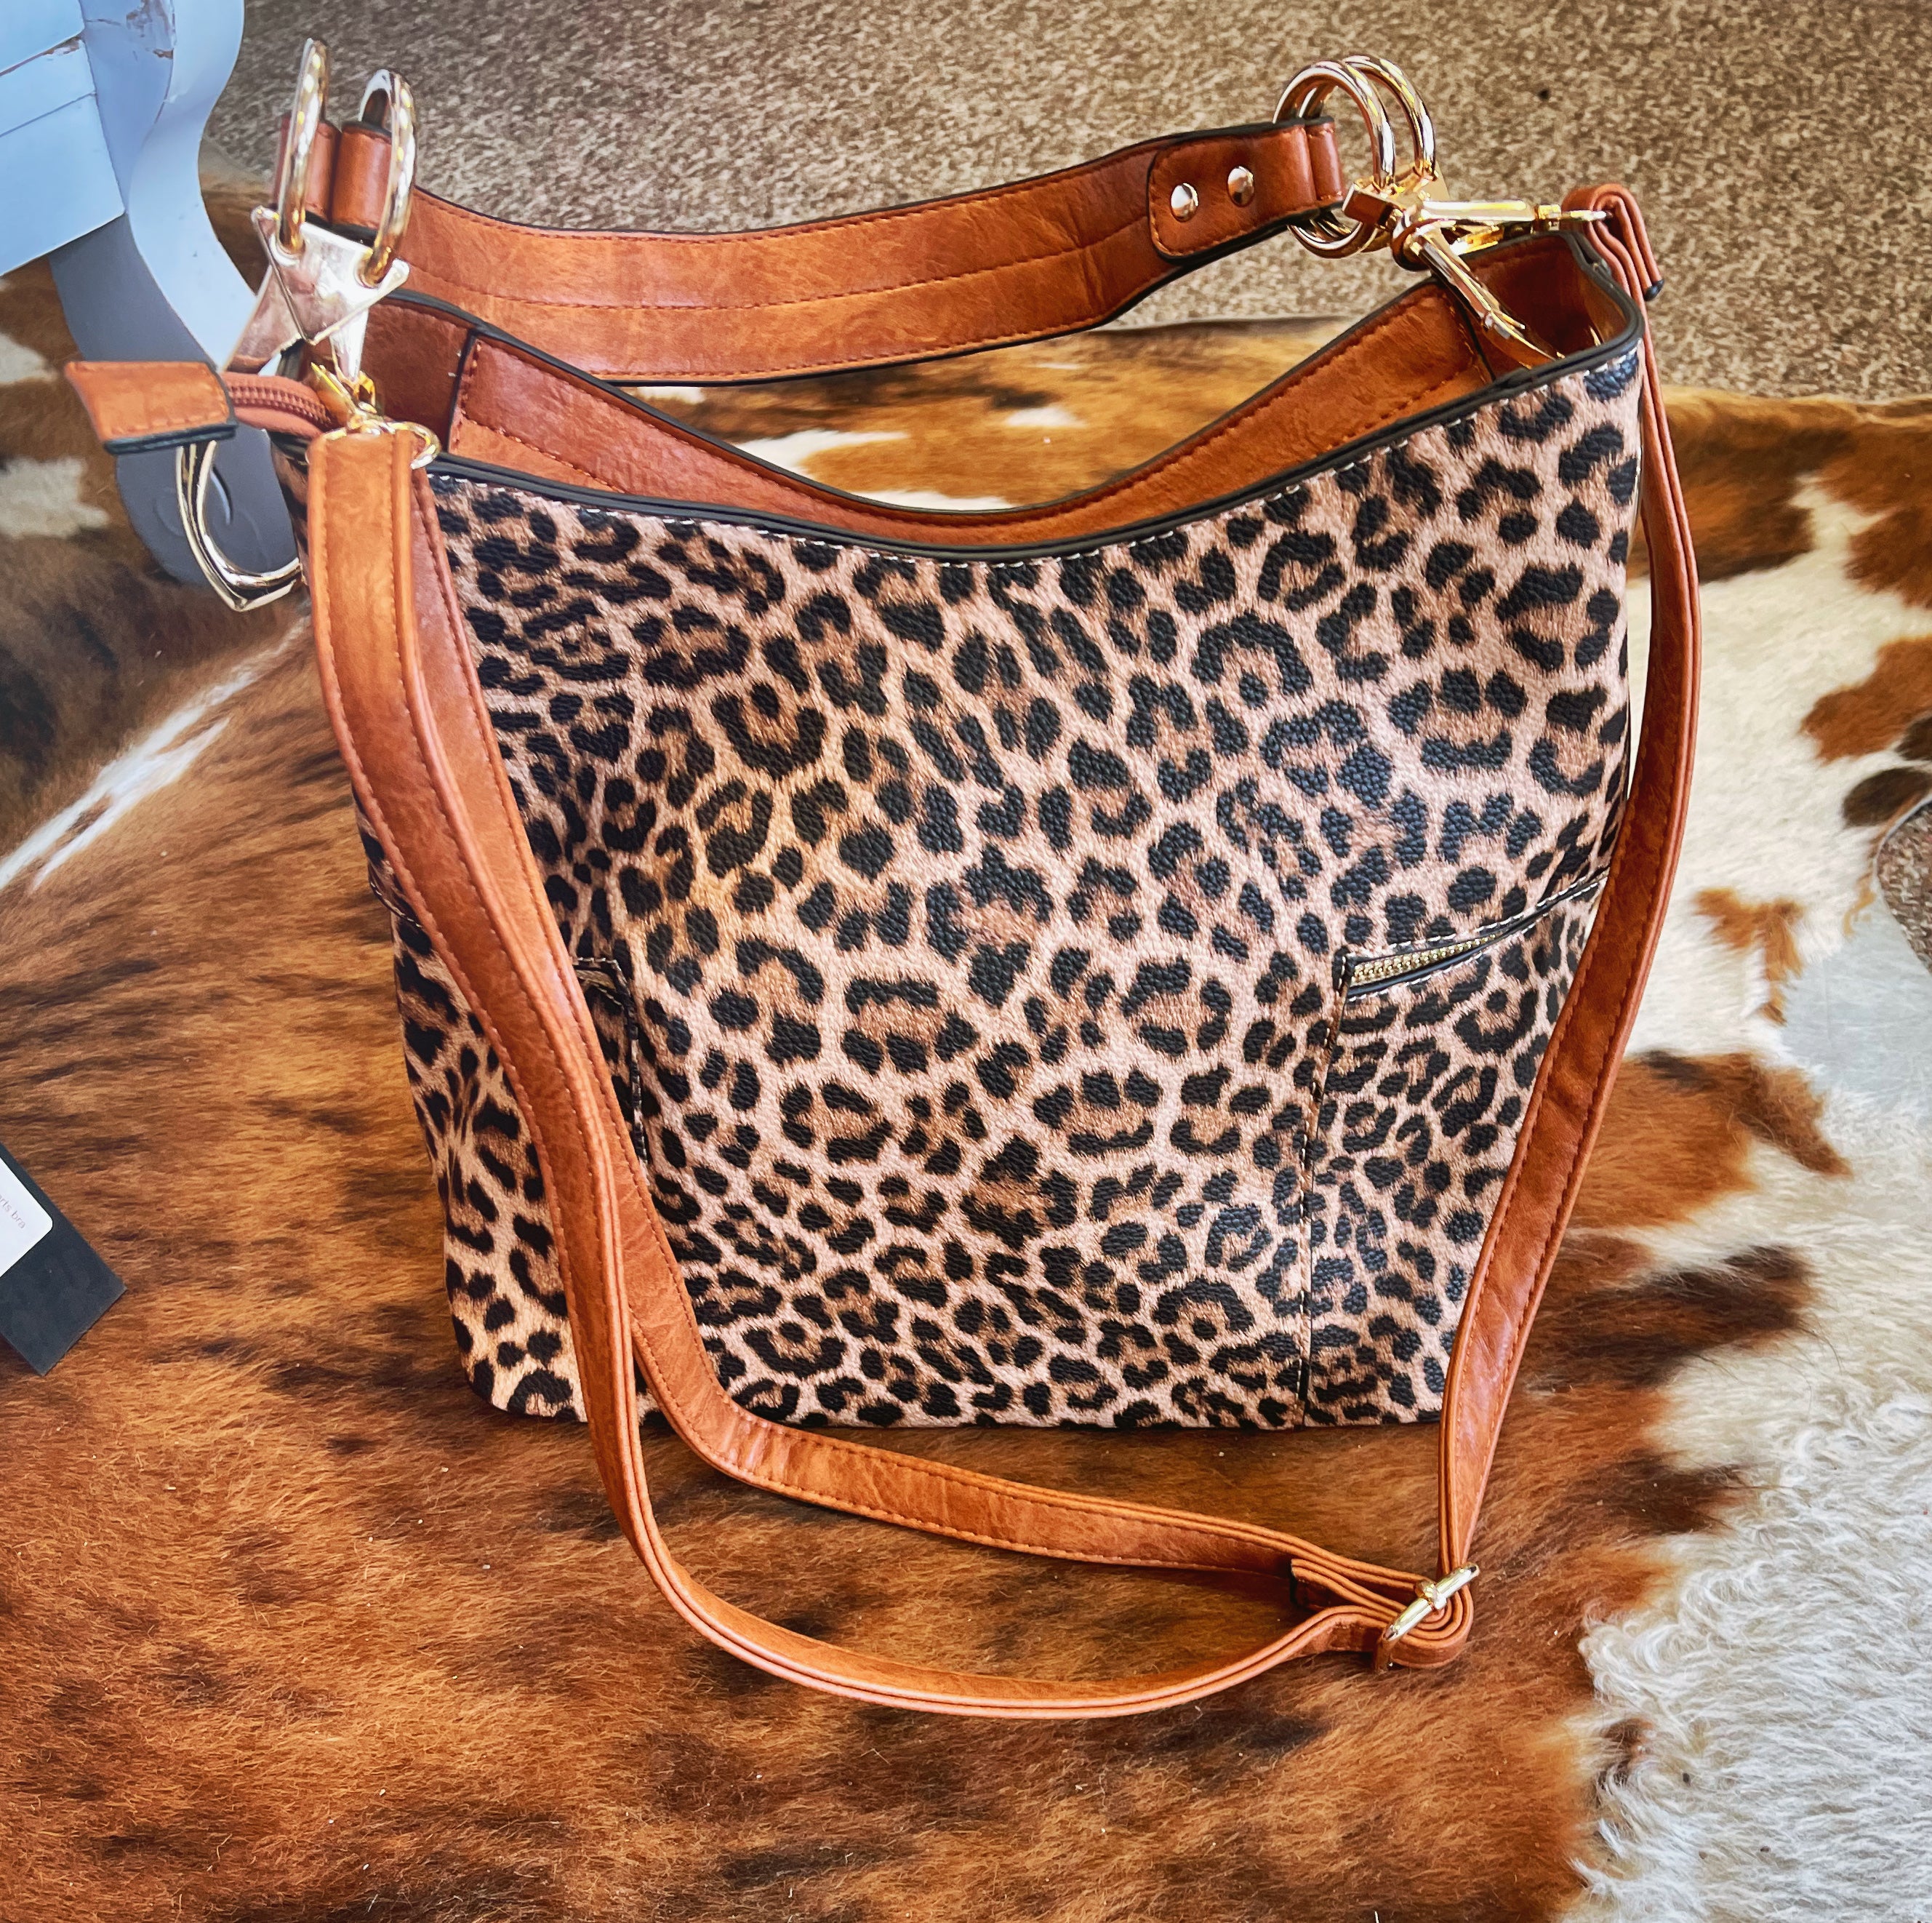 Leopard hobo handbag w/zipper pockets